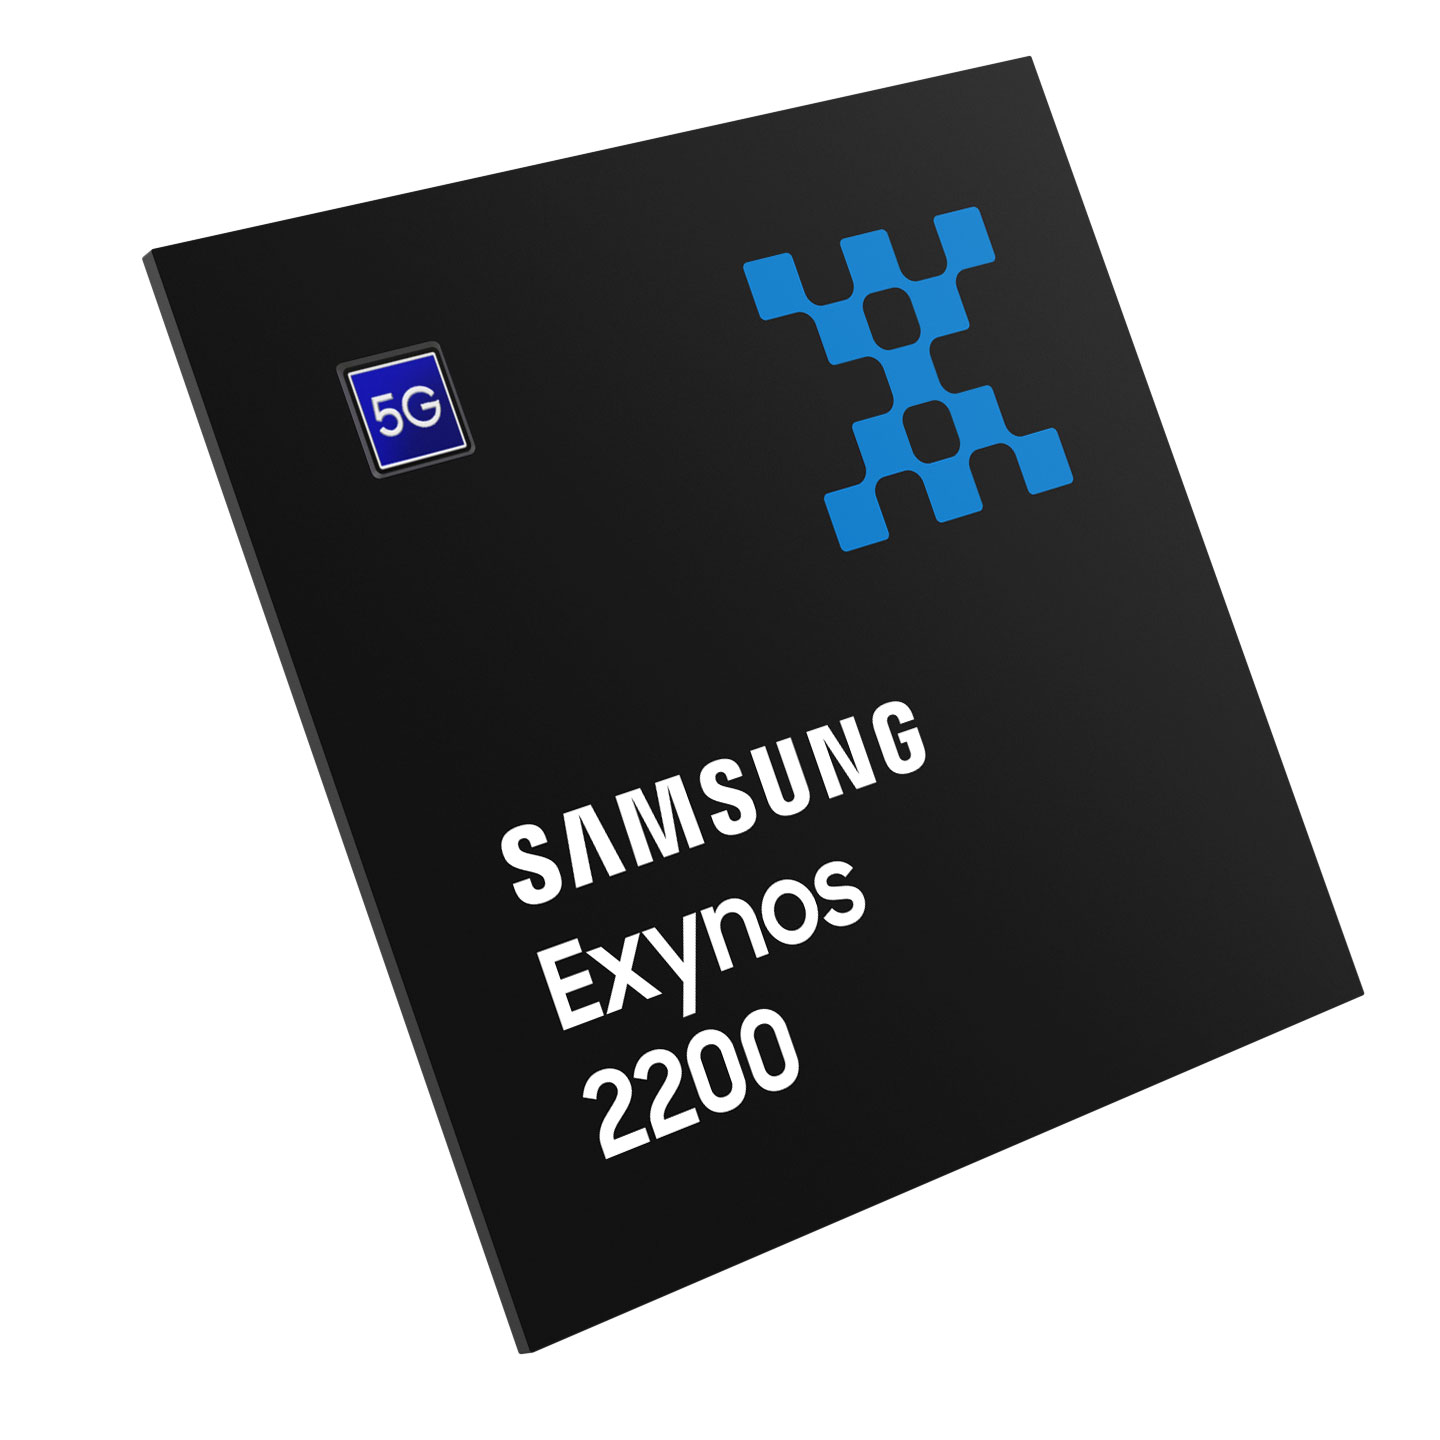 Samsung Exynos 2200 kini rasmi dengan GPU Xclipse yang menyokong ray tracing dan variable rate shading 5